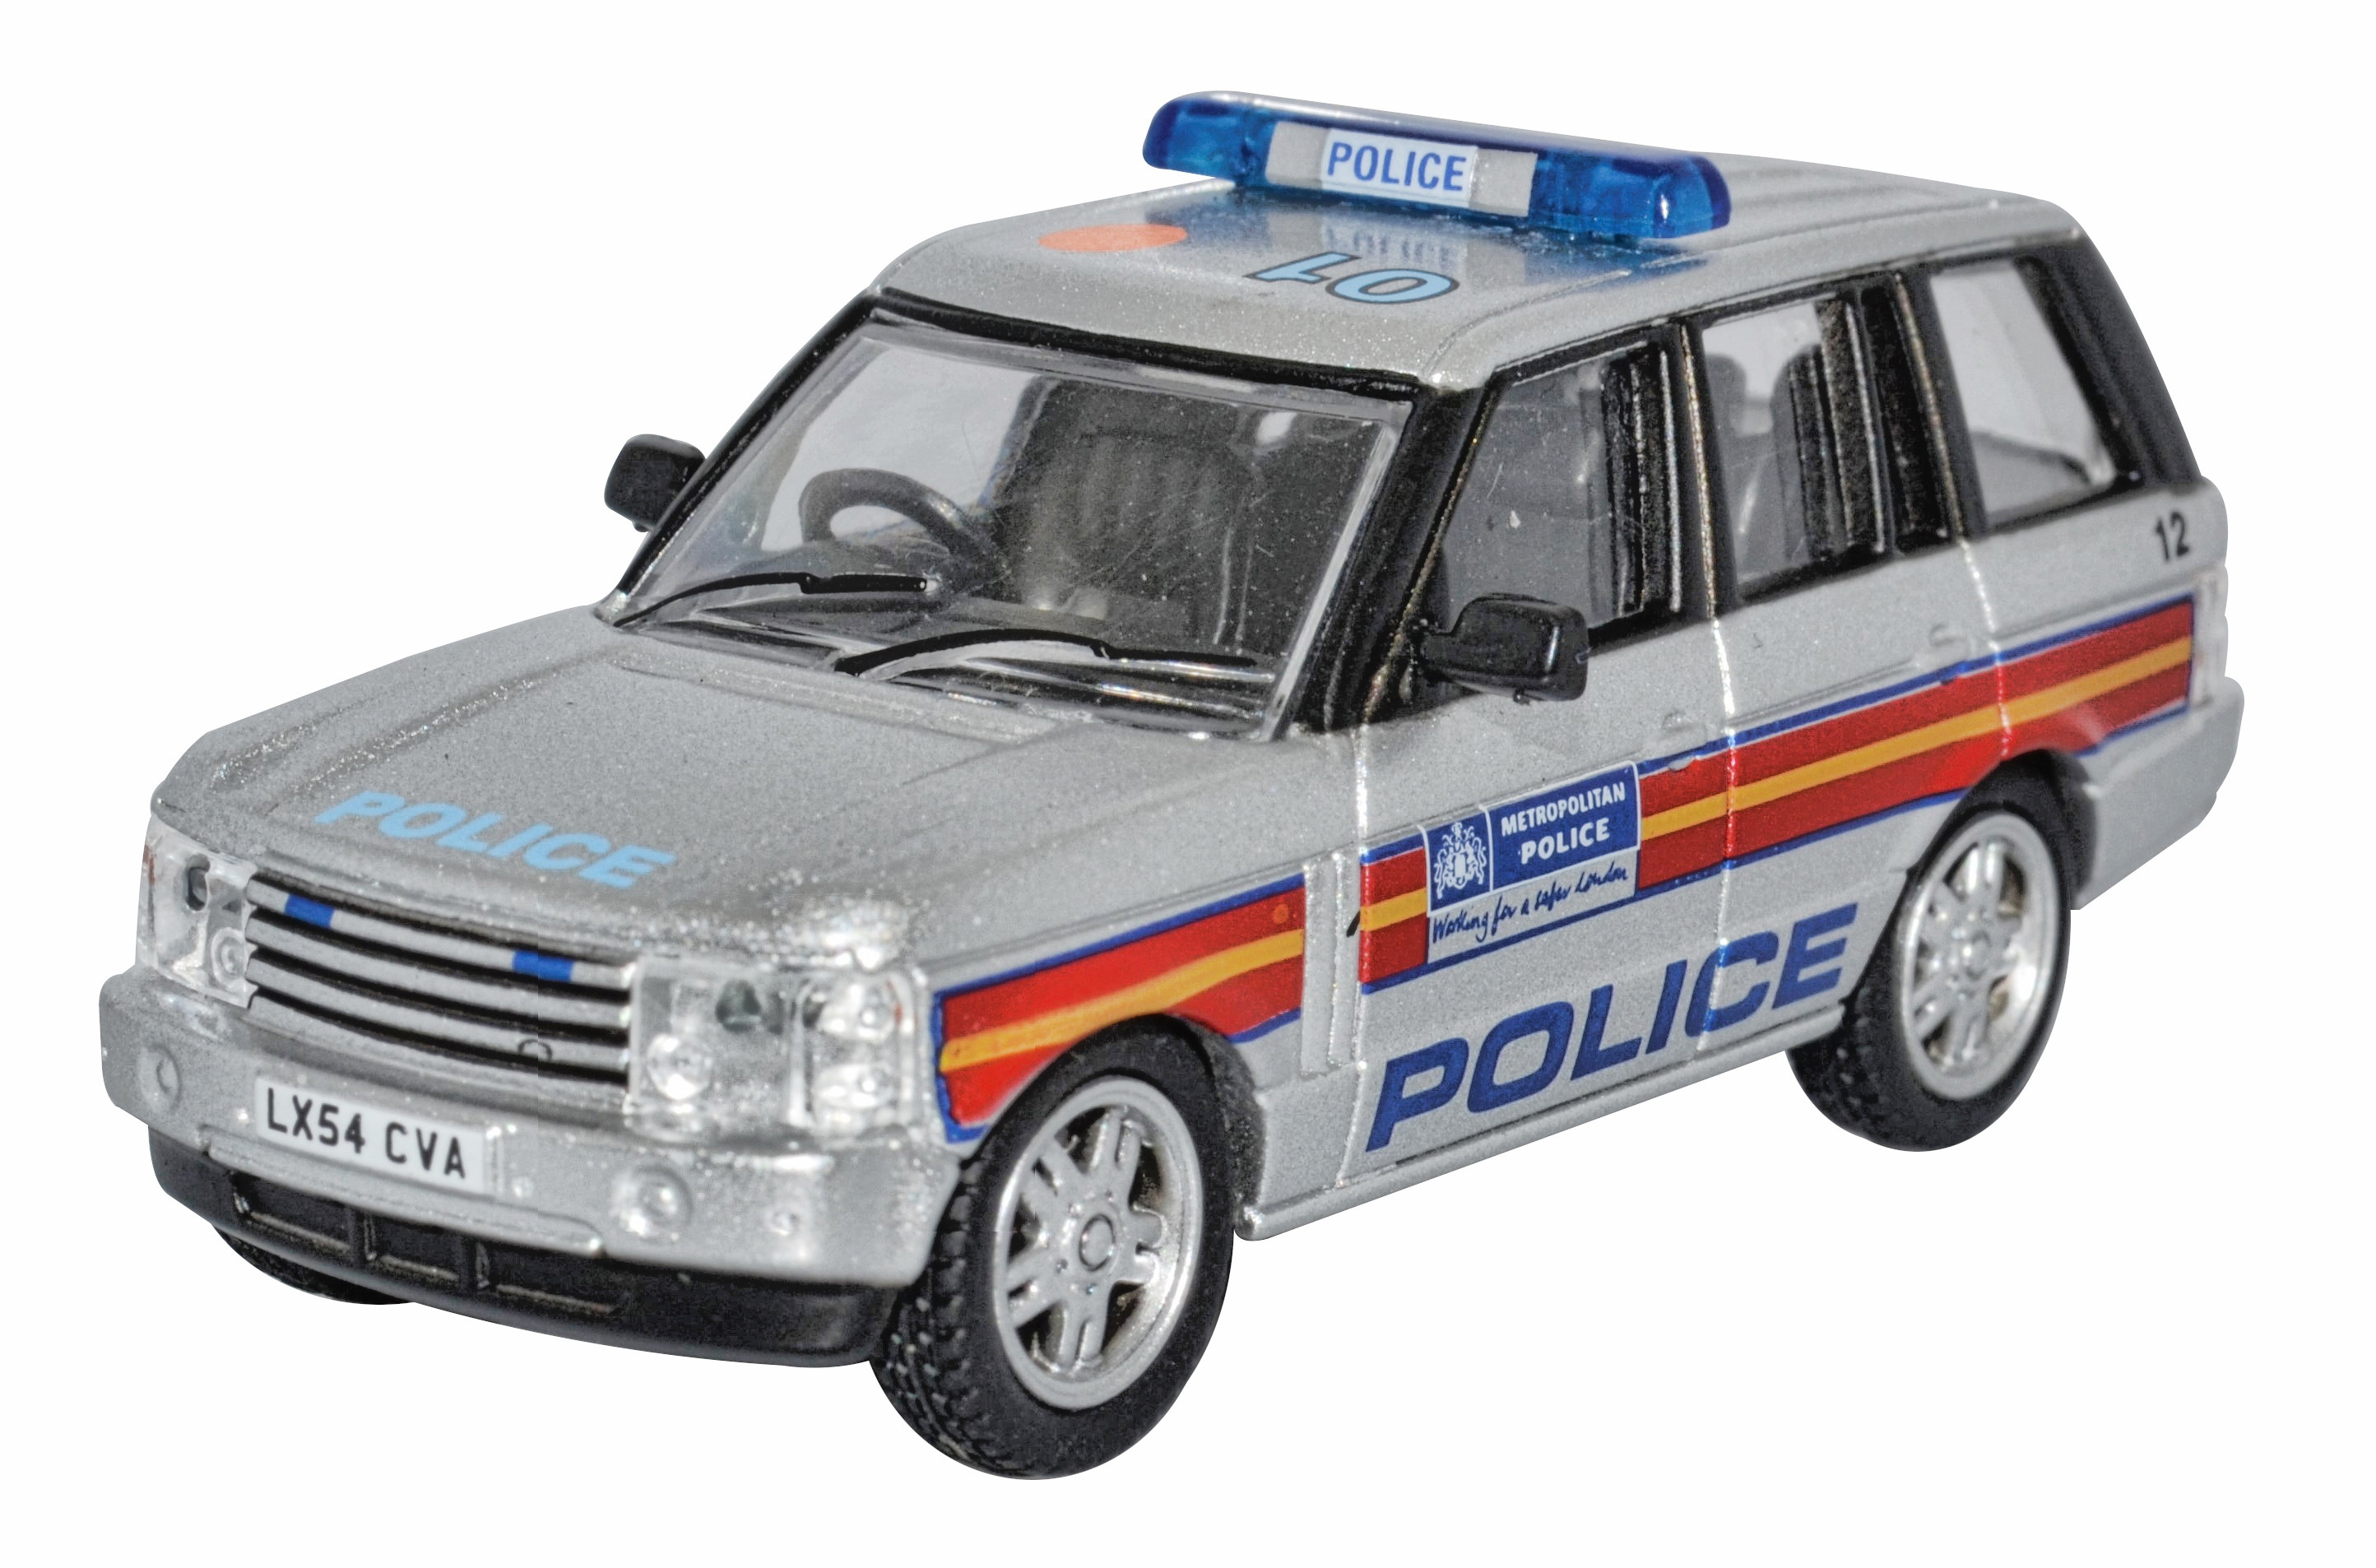 Range Rover 3rd Generation Metropolitan Police